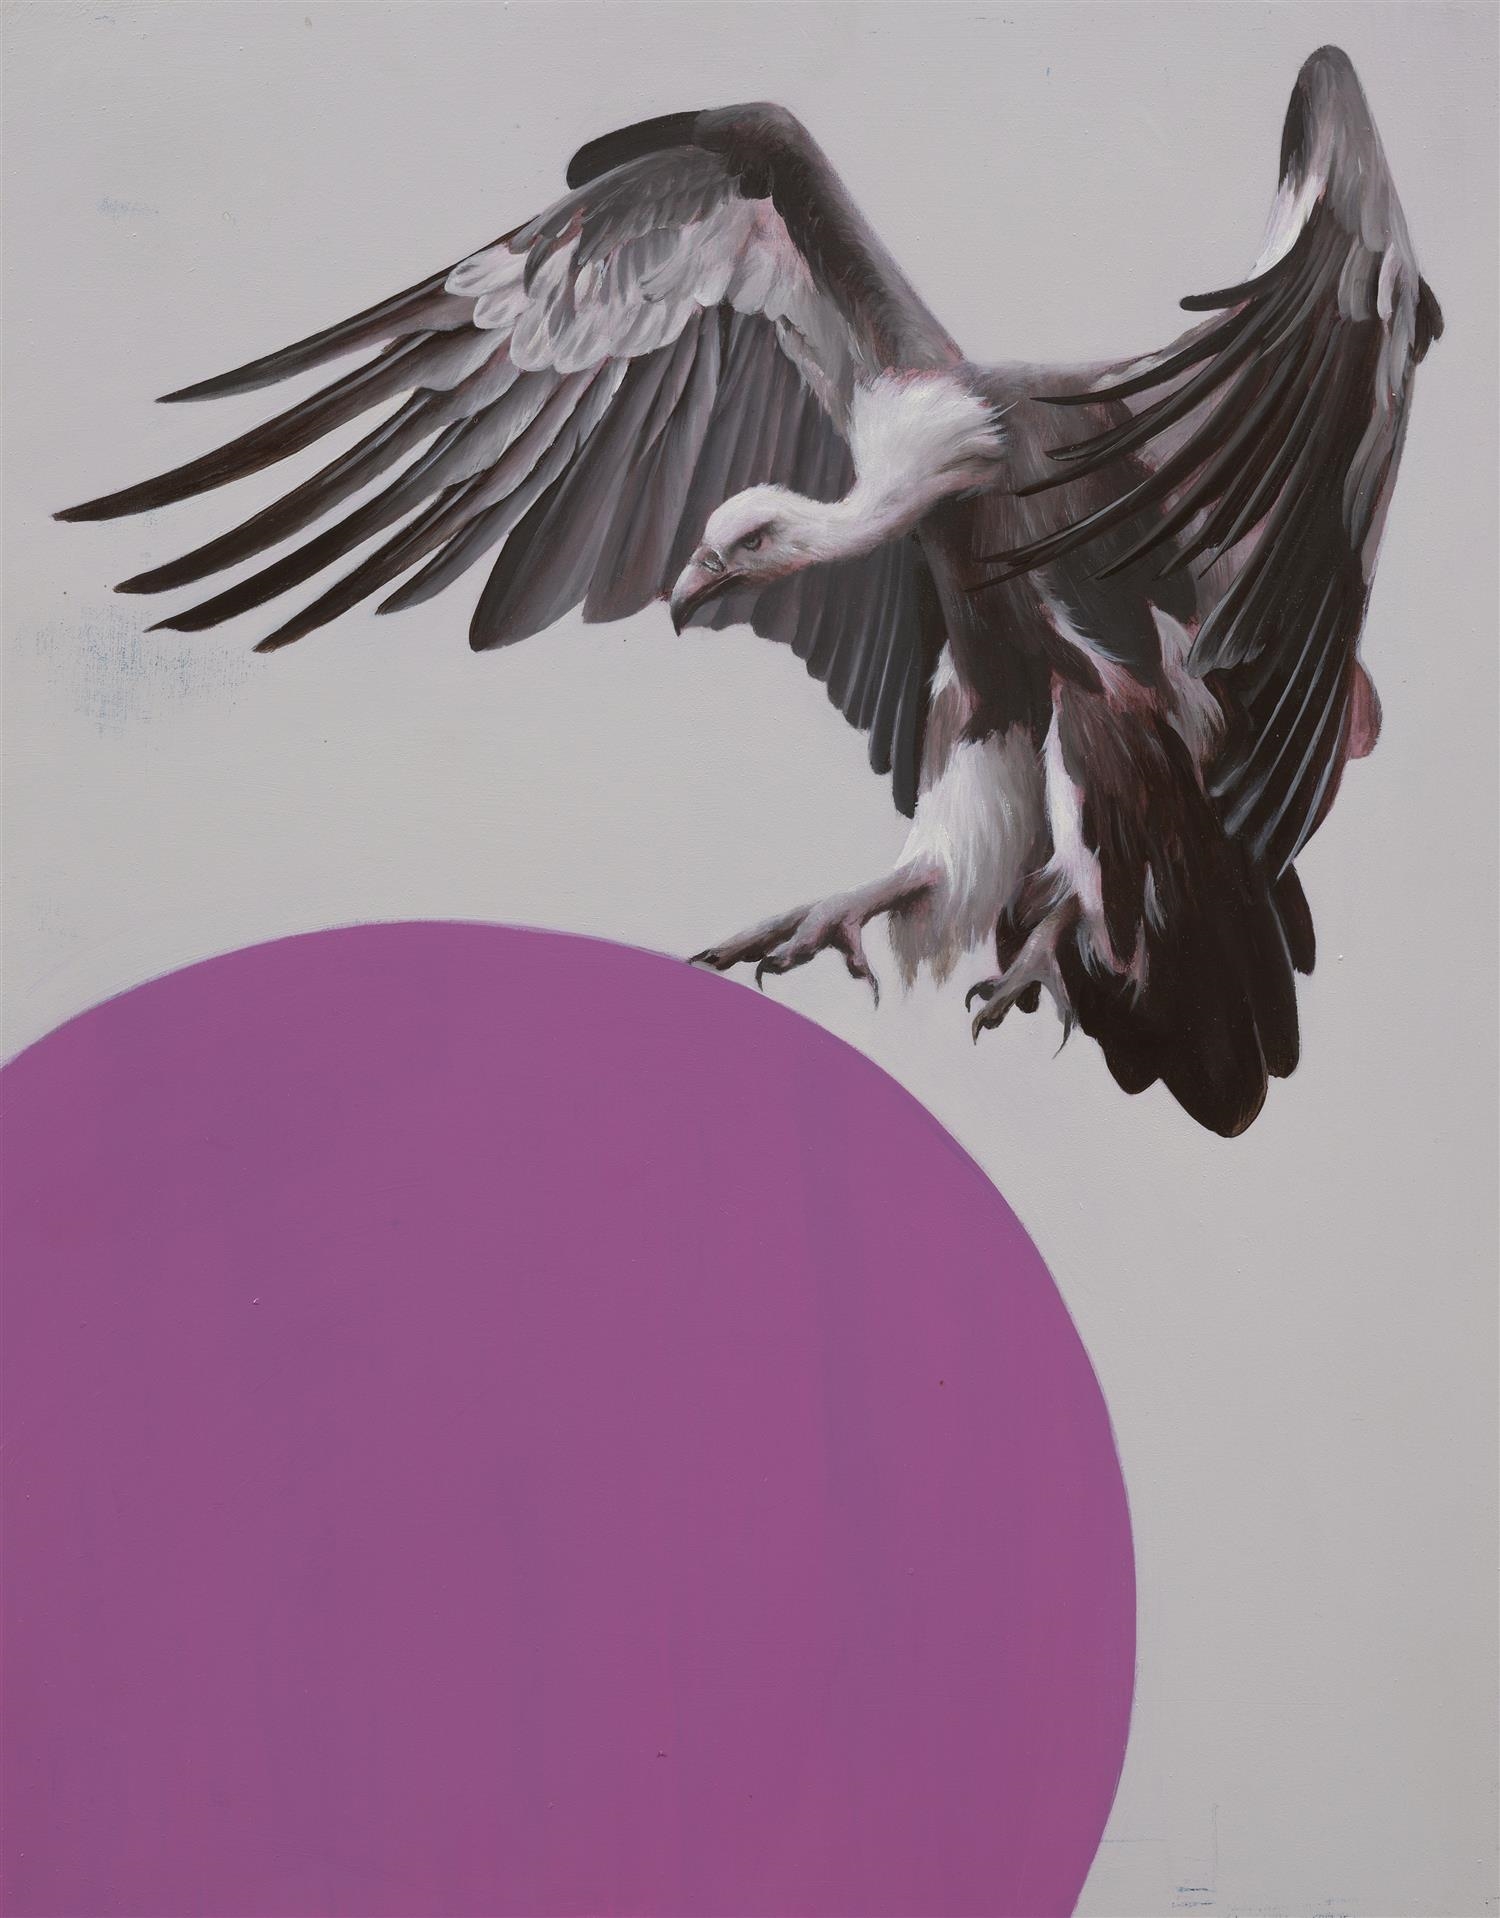 Vulture 2020 by Sam Leach, 2020